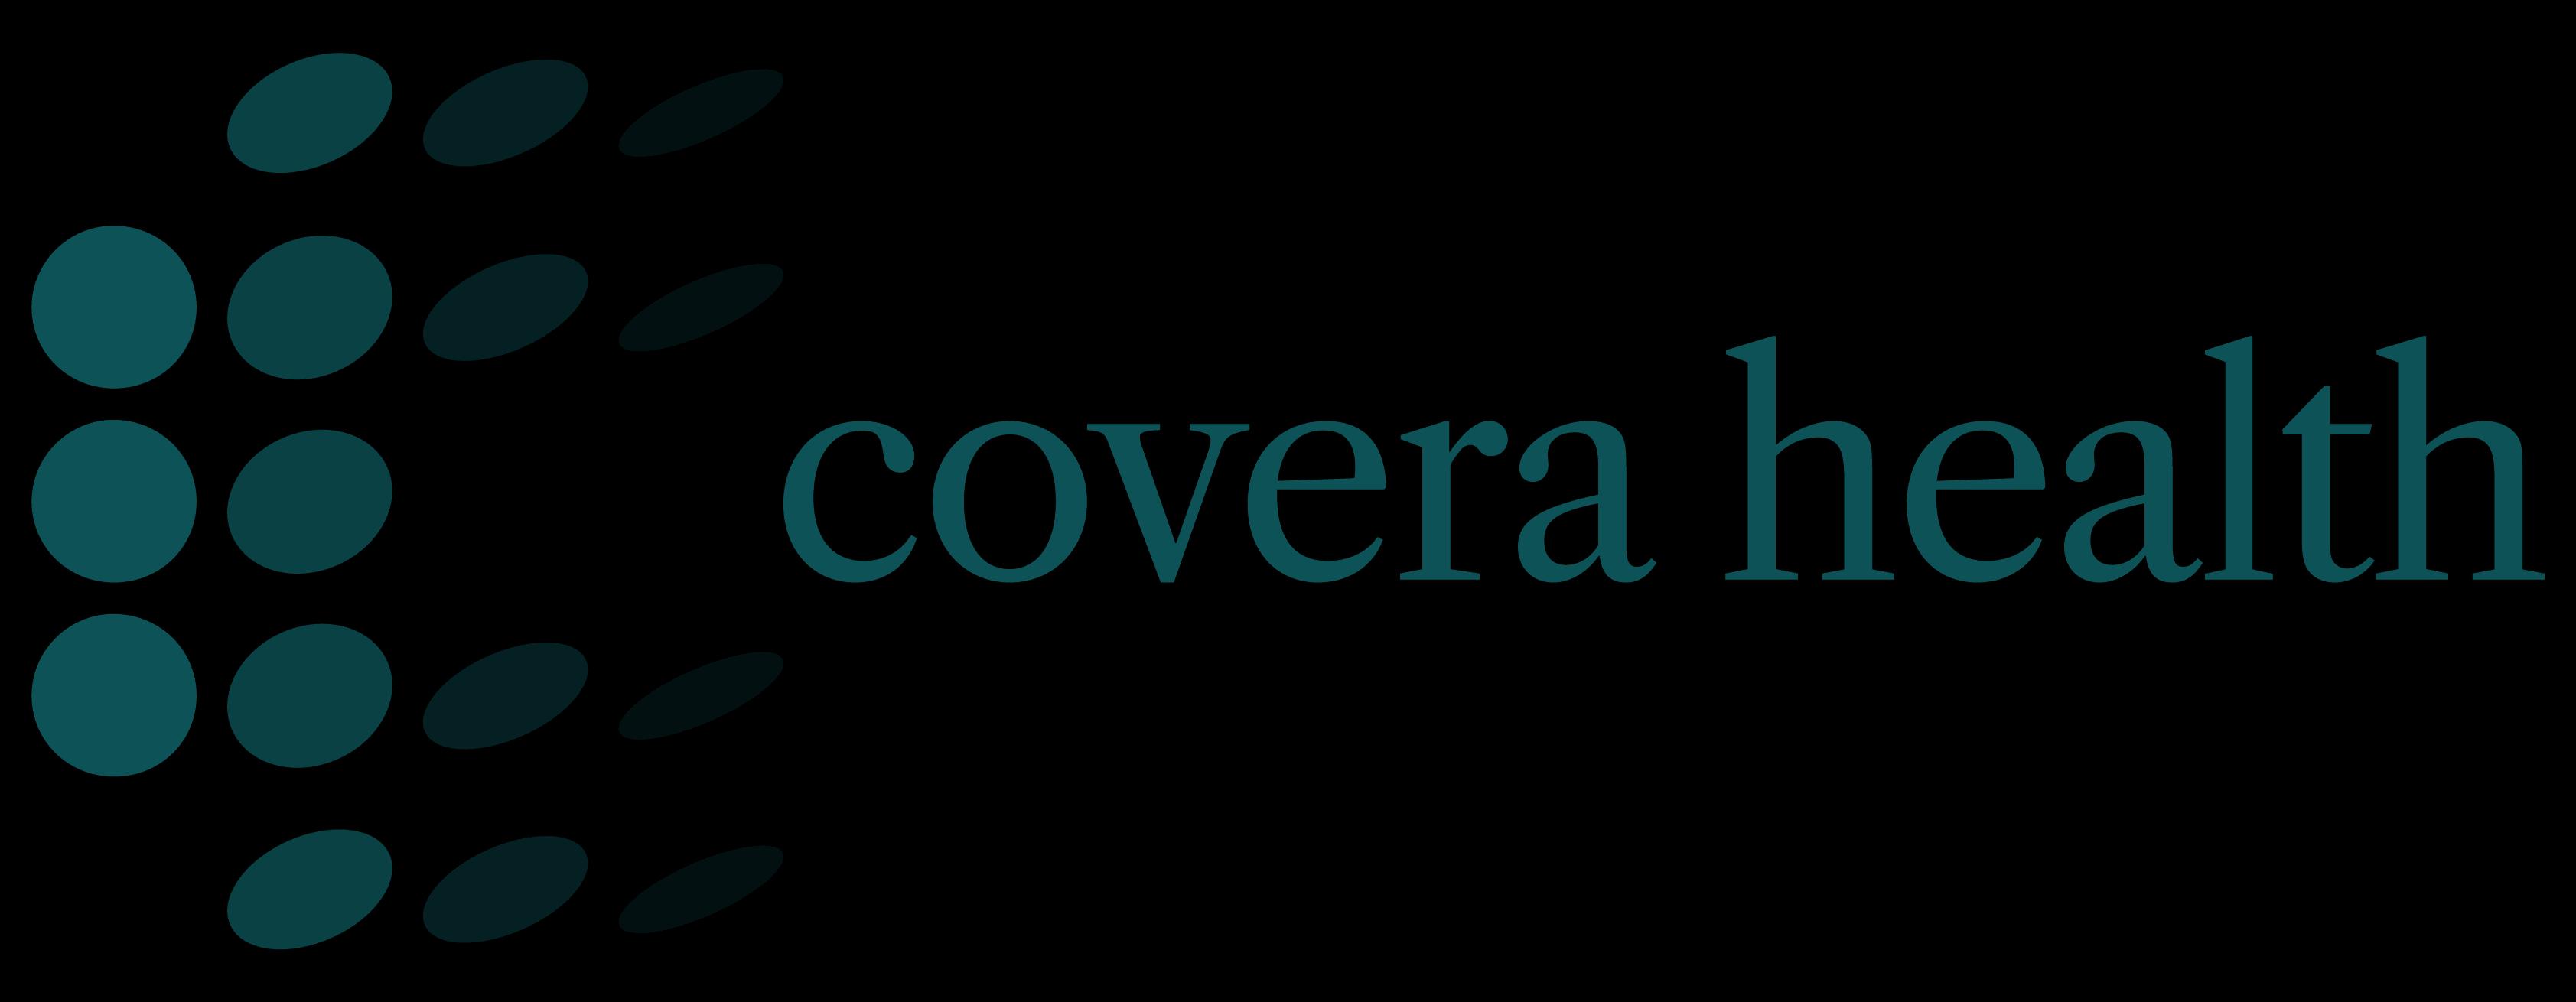 Covera Health_logo